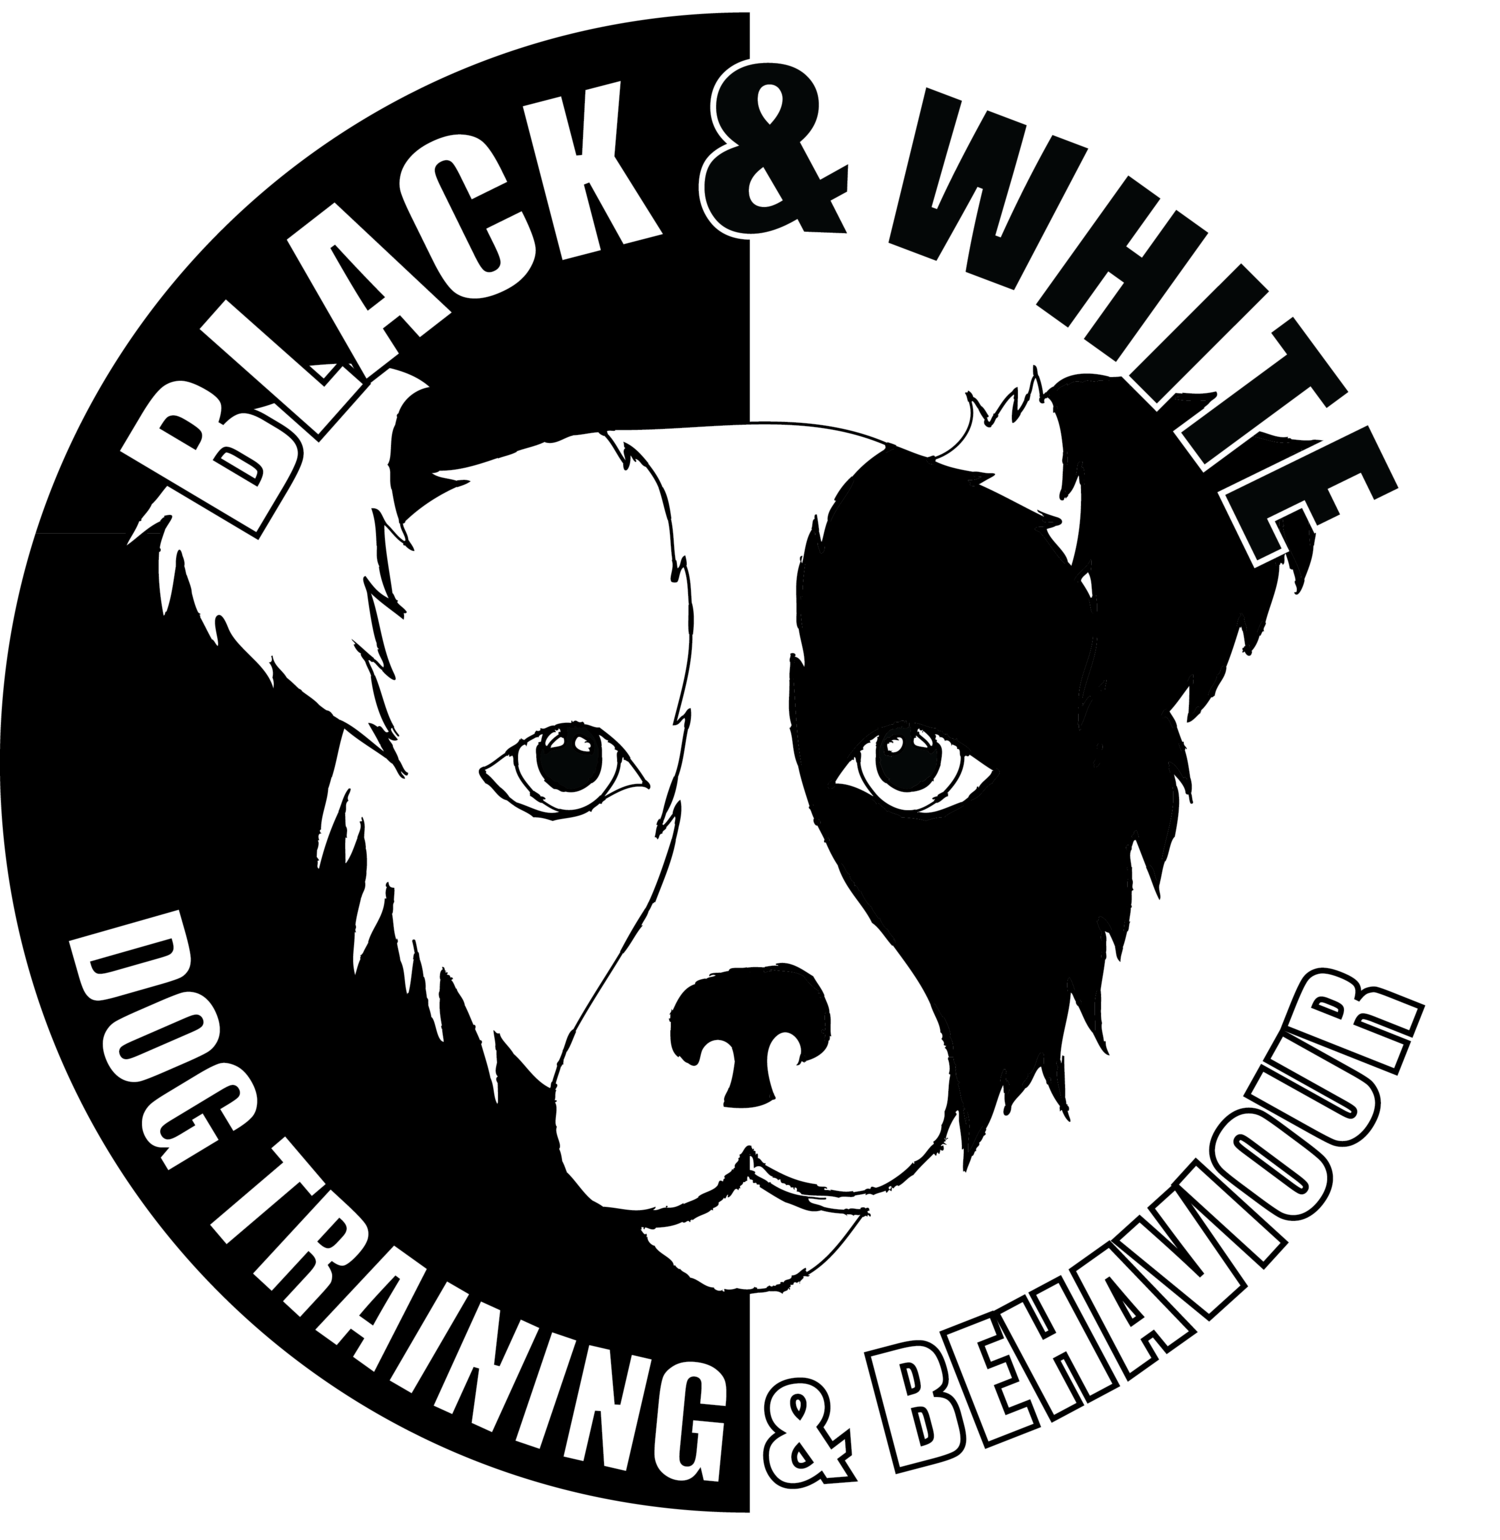 Black & White Dog Training and Behaviour